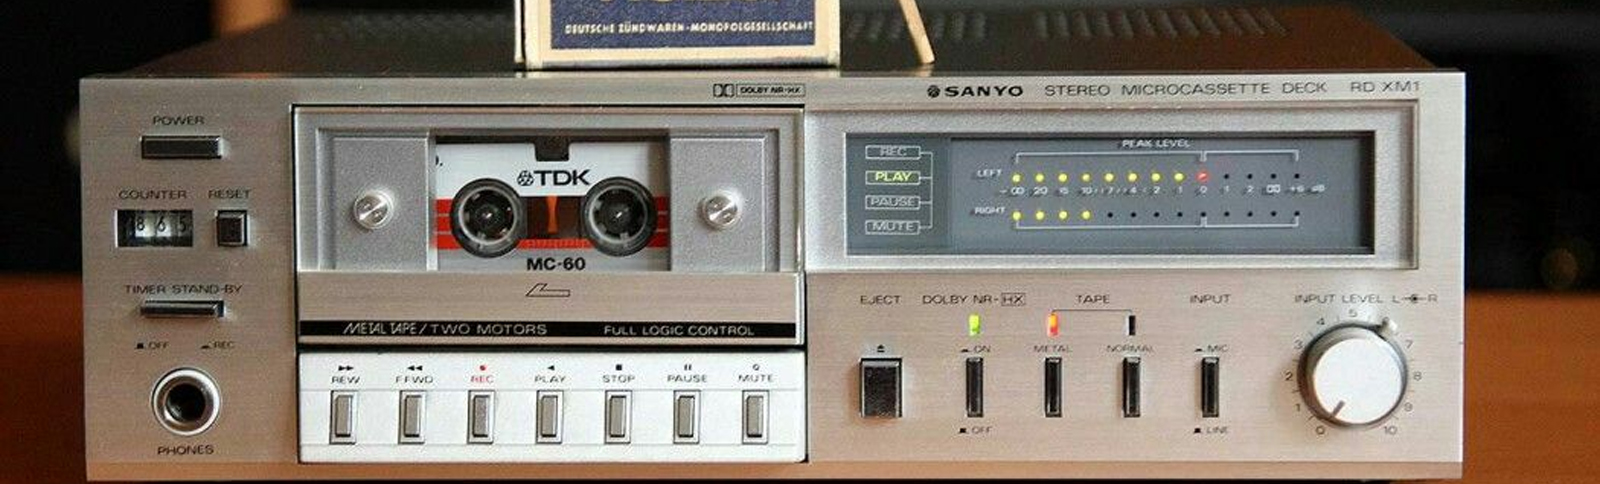 Convert Mini Audio Cassette Tapes, Convert Micro cassette